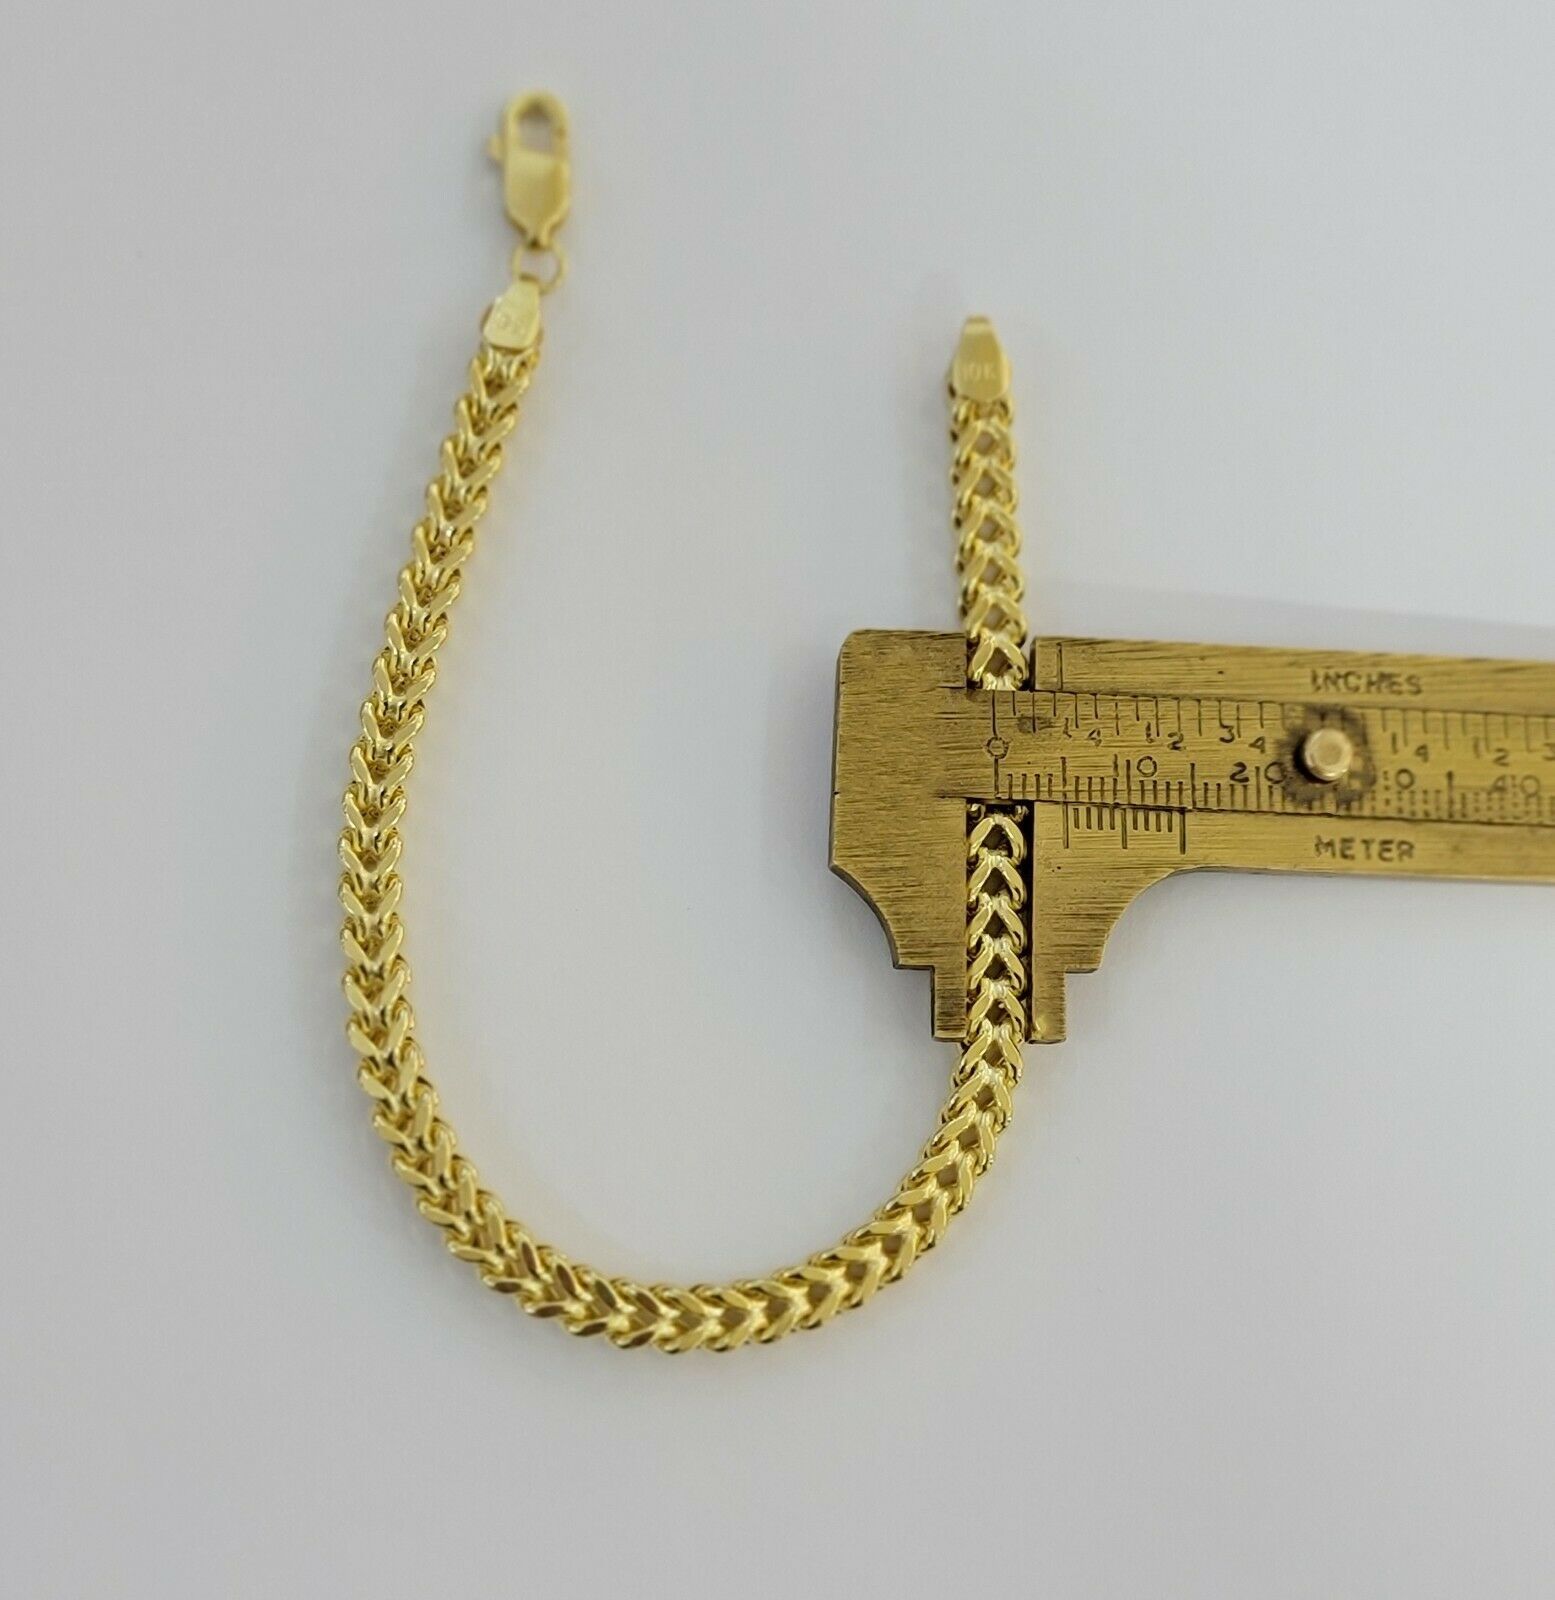 Real 10k Gold Franco Bracelet 8